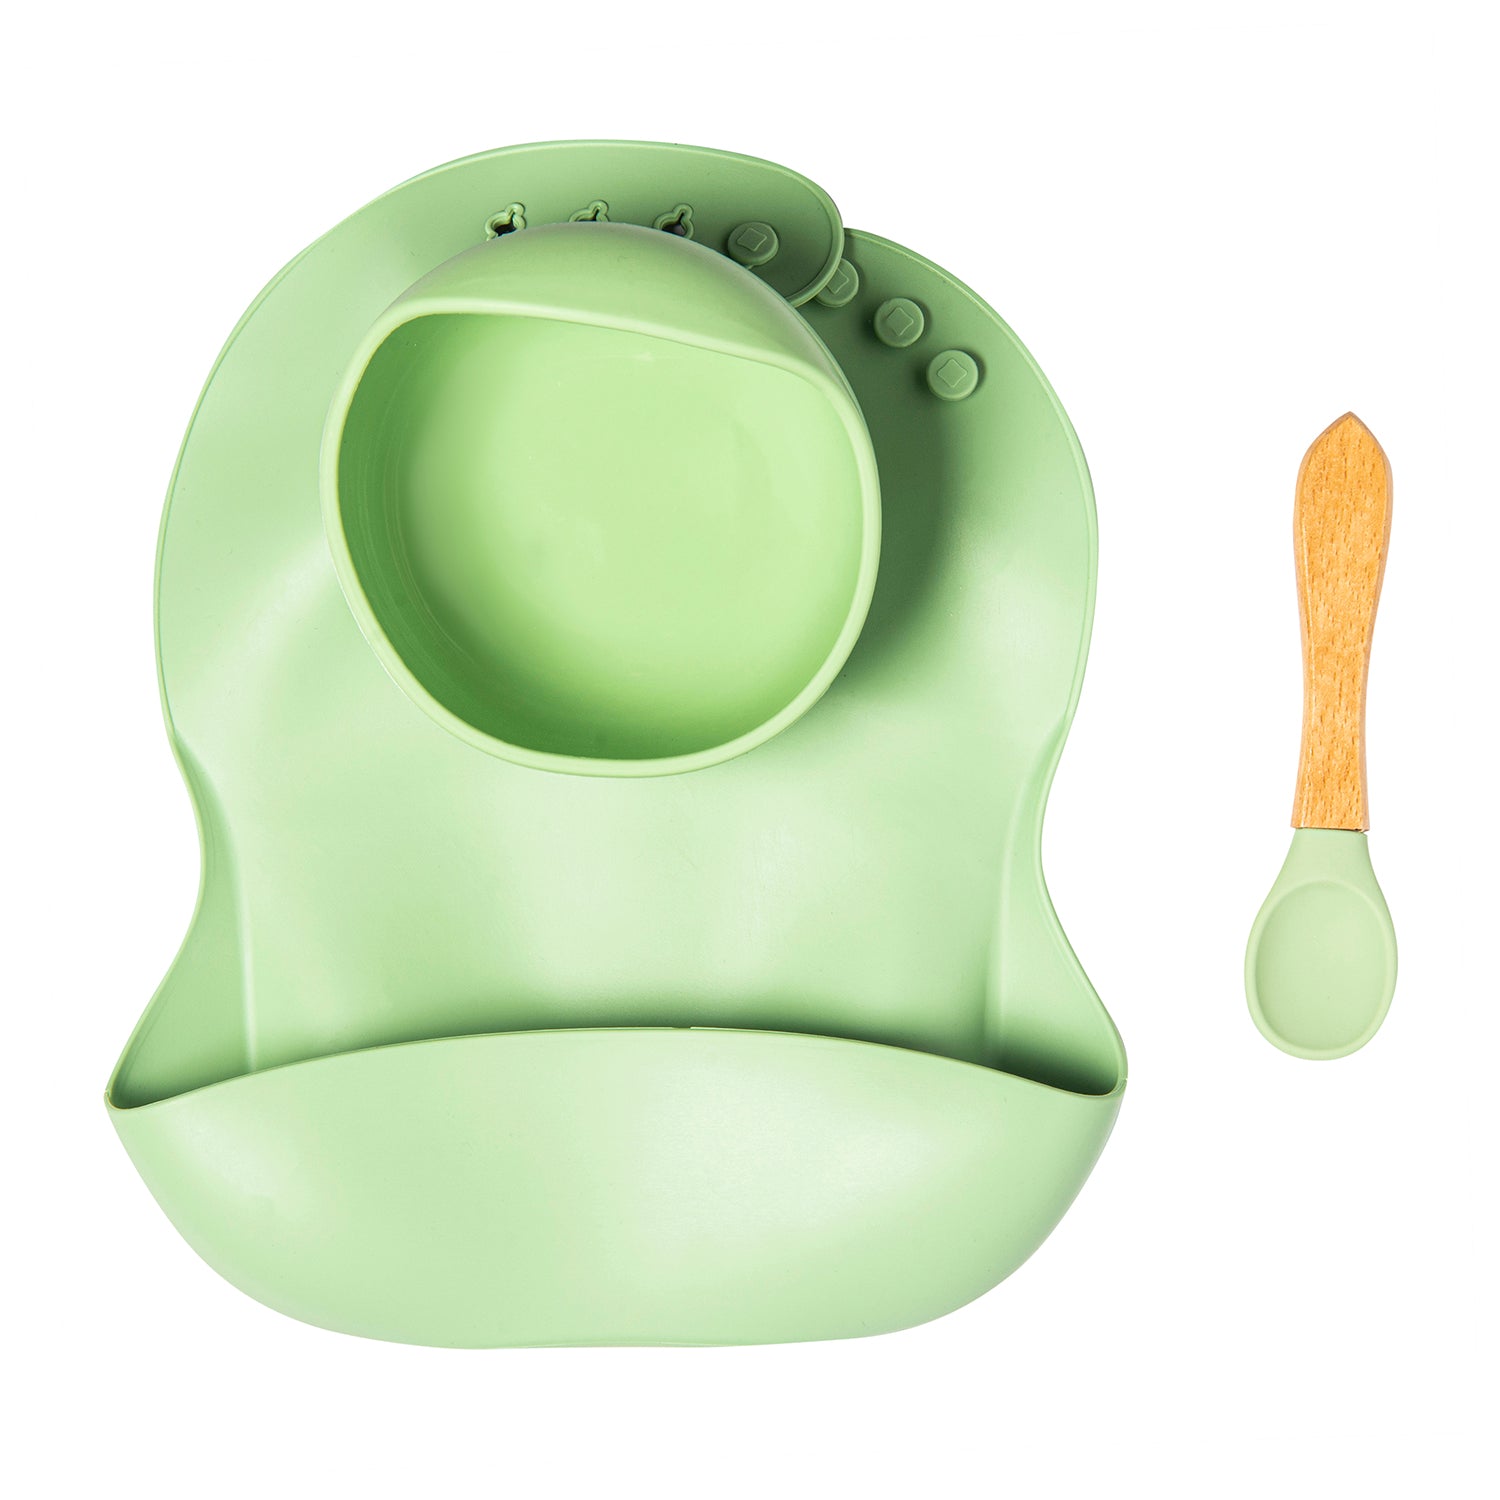 Green Waterproof Silicon Bib And Bowl Set